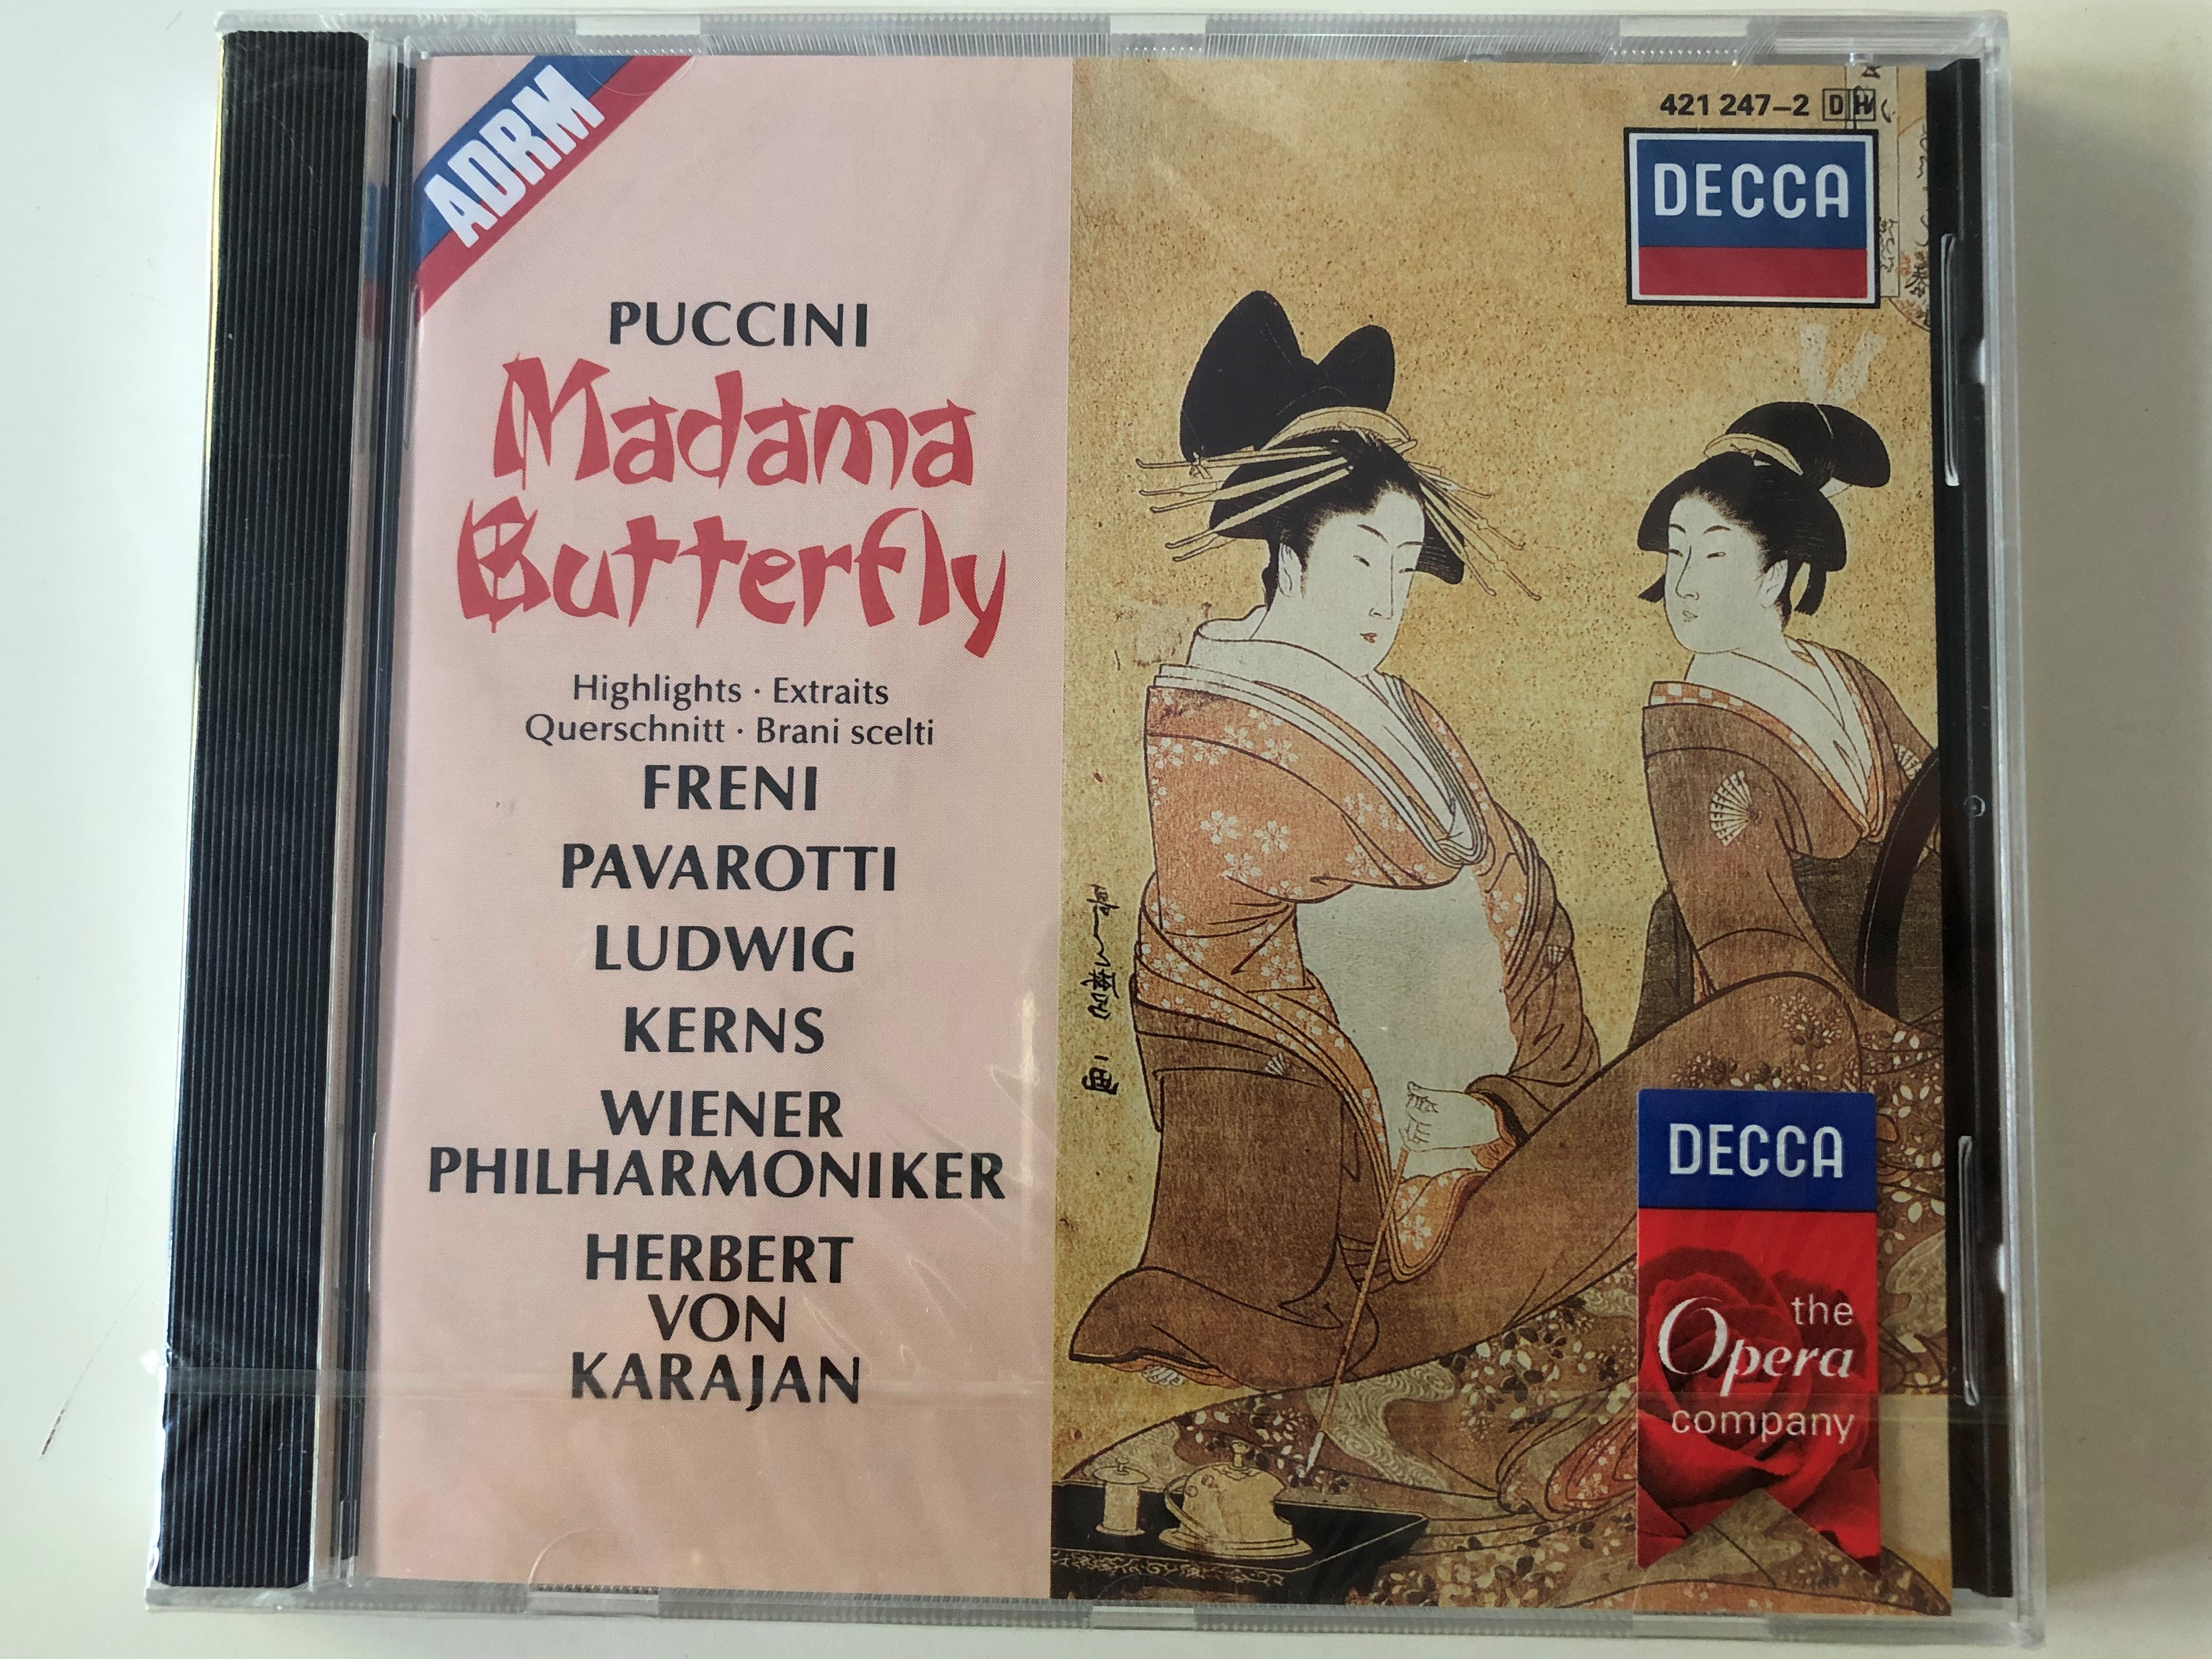 puccini-madama-butterfly-highlights-extraits-querschnitt-brani-scelti-freni-pavarotti-ludwig-kerns-wiener-philharmoniker-herbert-von-karajan-decca-audio-cd-1989-421-247-2-1-.jpg